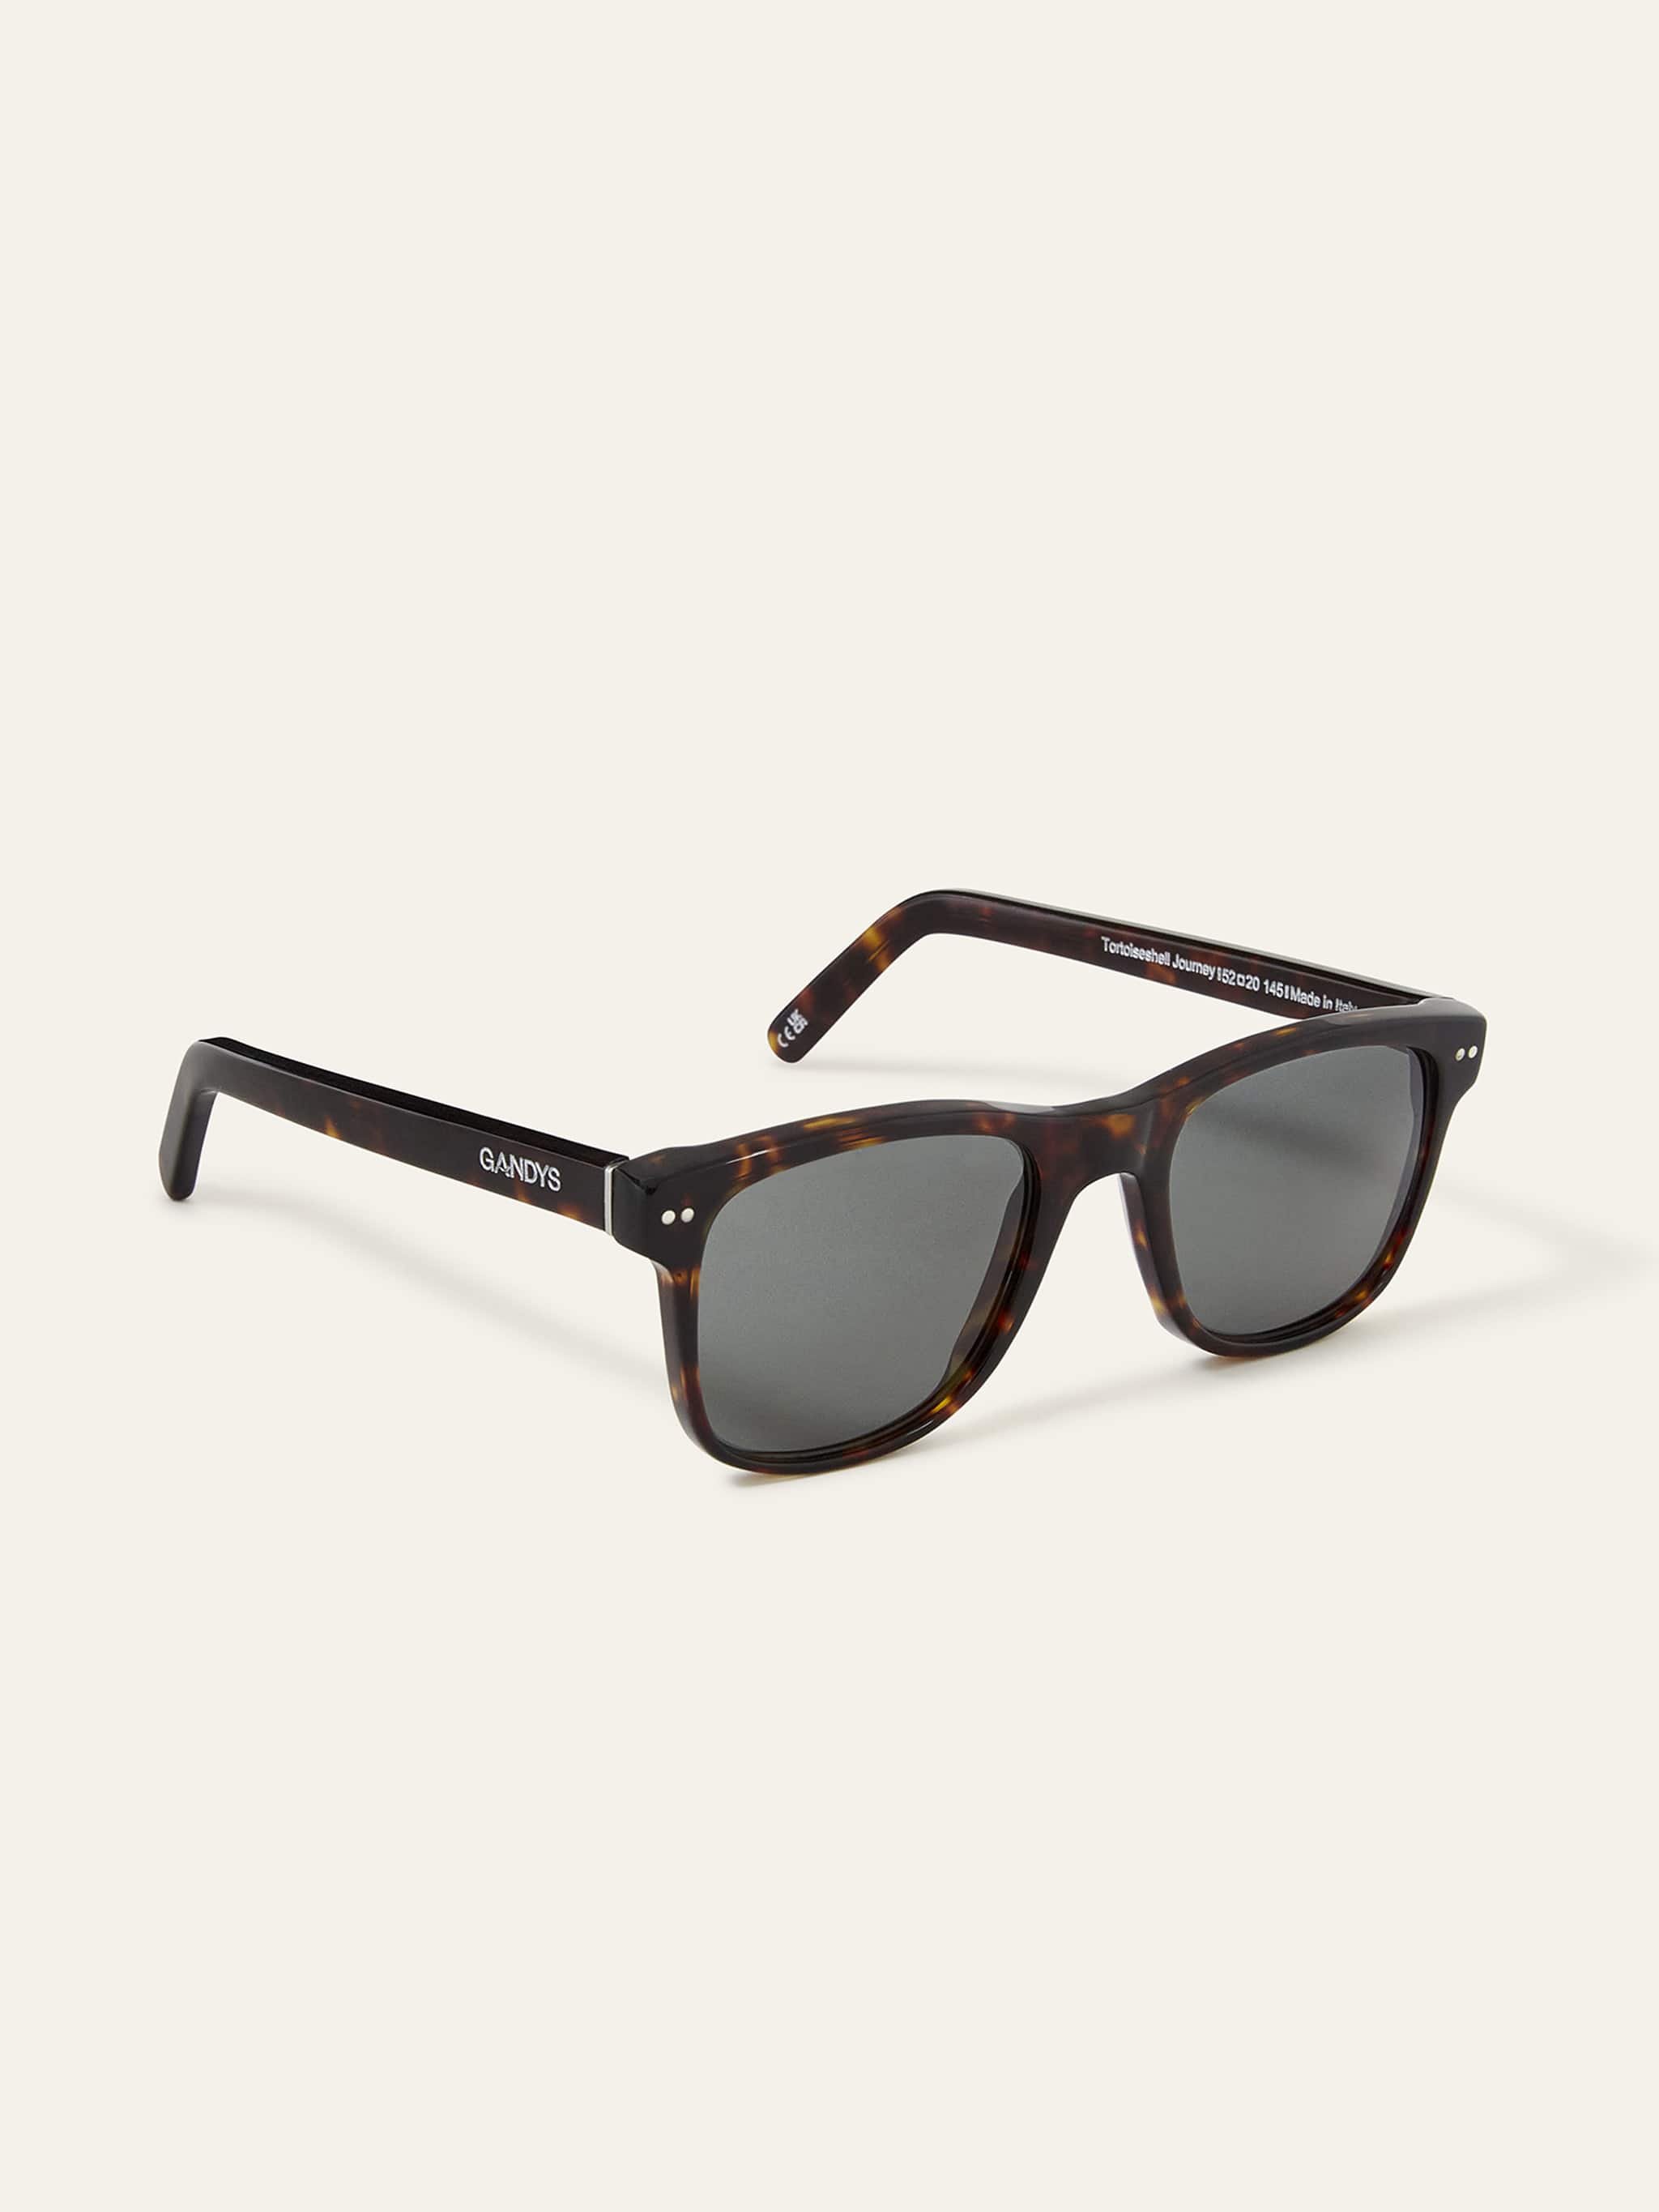 tortoiseshell-journey-sunglasses-773920.jpg